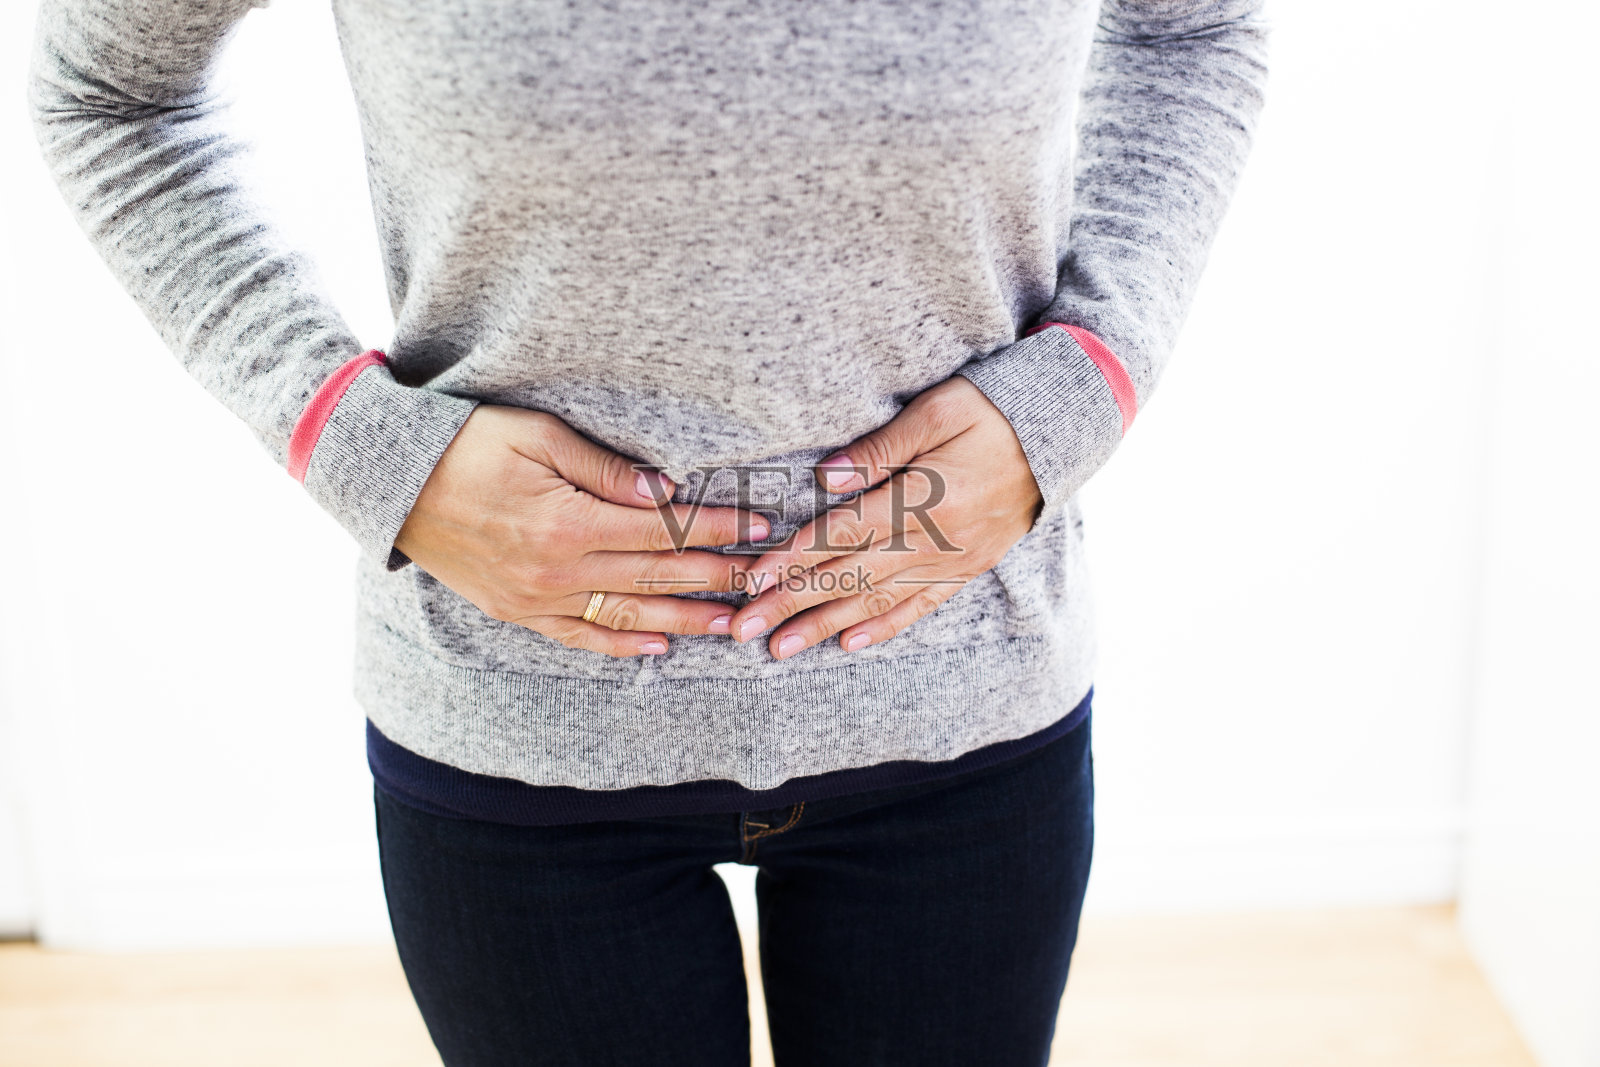 女性胃痛照片摄影图片